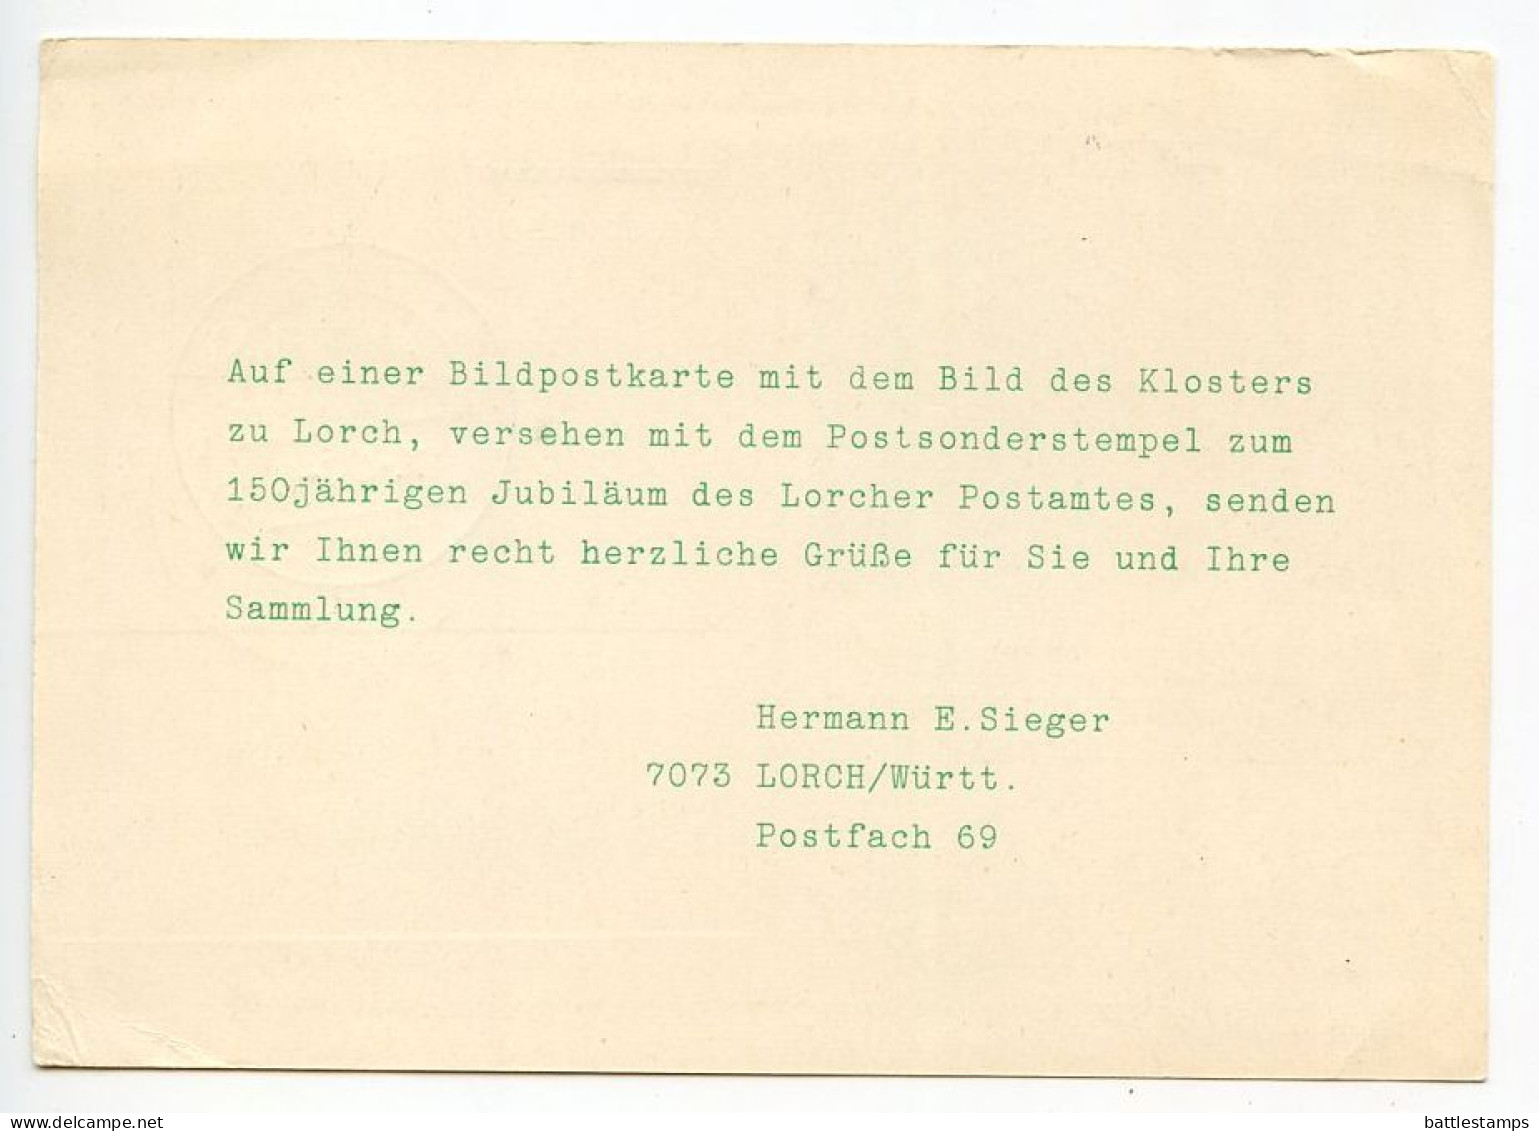 Germany, West 1963 10pf. Albrecht Dürer Postal Card; 50 Jahre Postamt Lorch / Württemberg; From Hermann E. Sieger - Postcards - Used